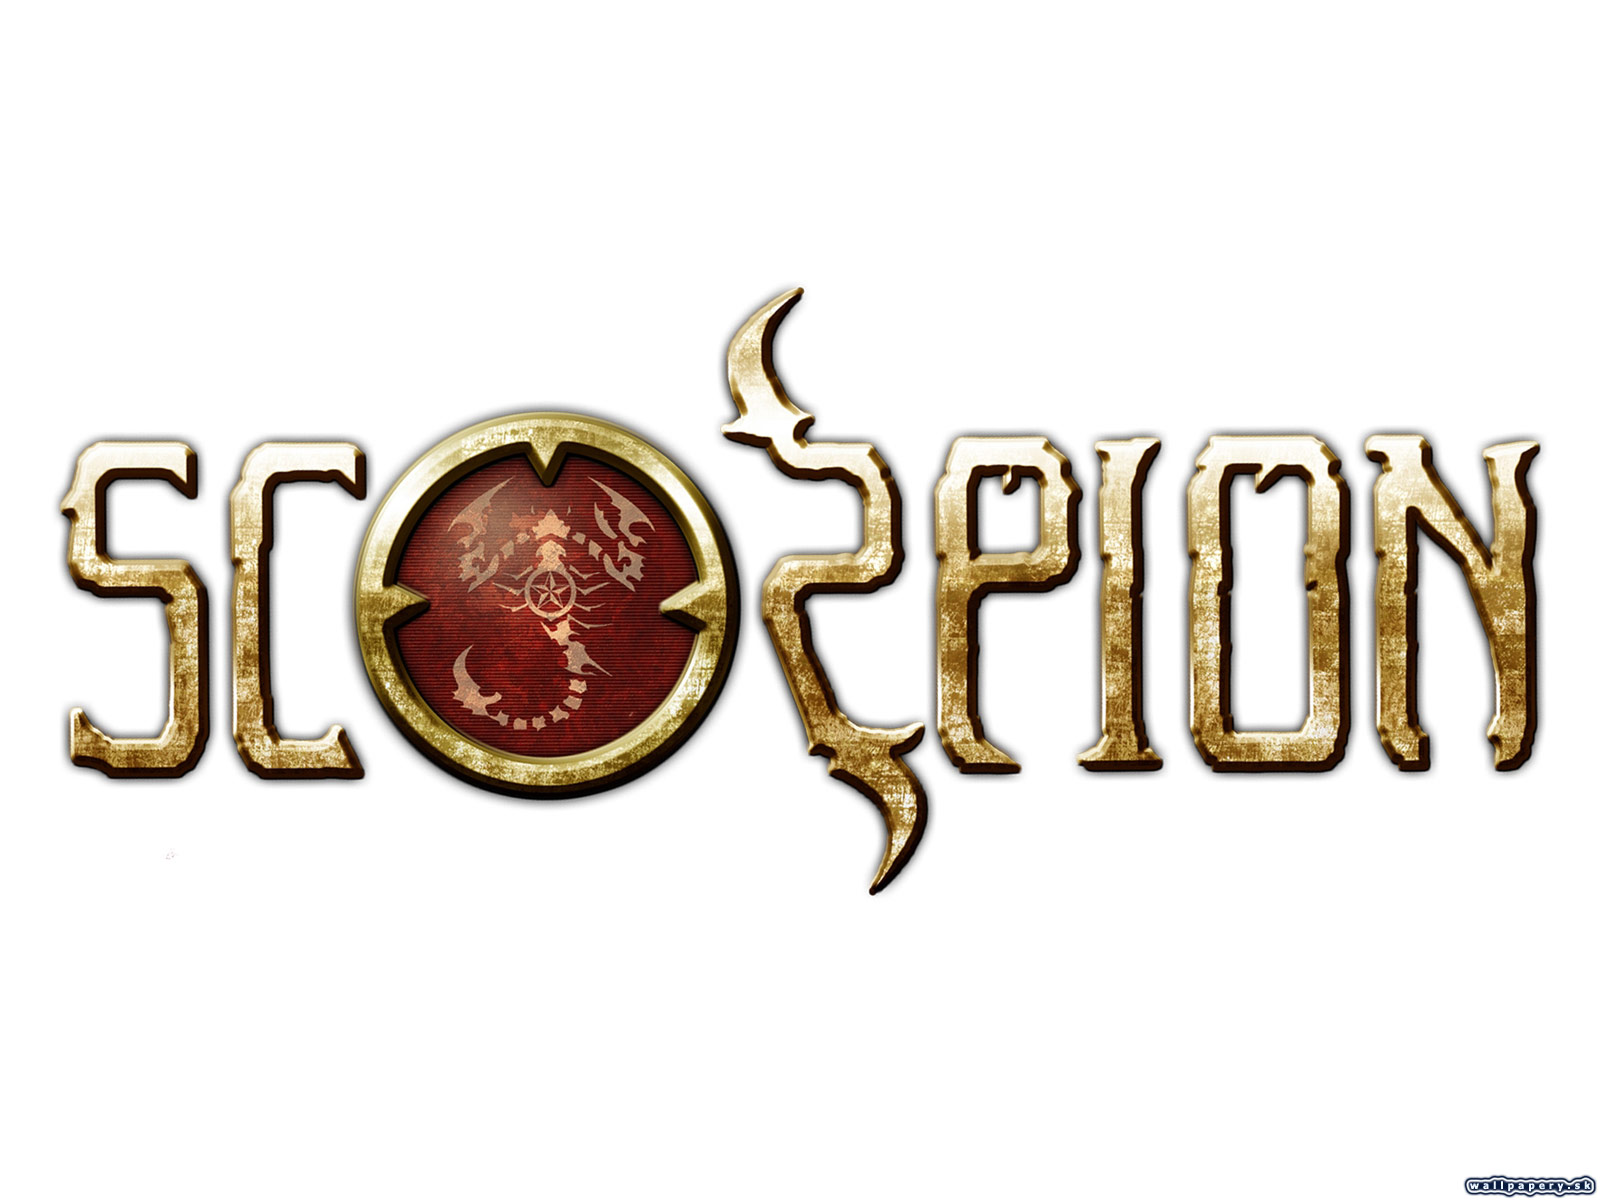 Scorpion: Disfigured - wallpaper 4